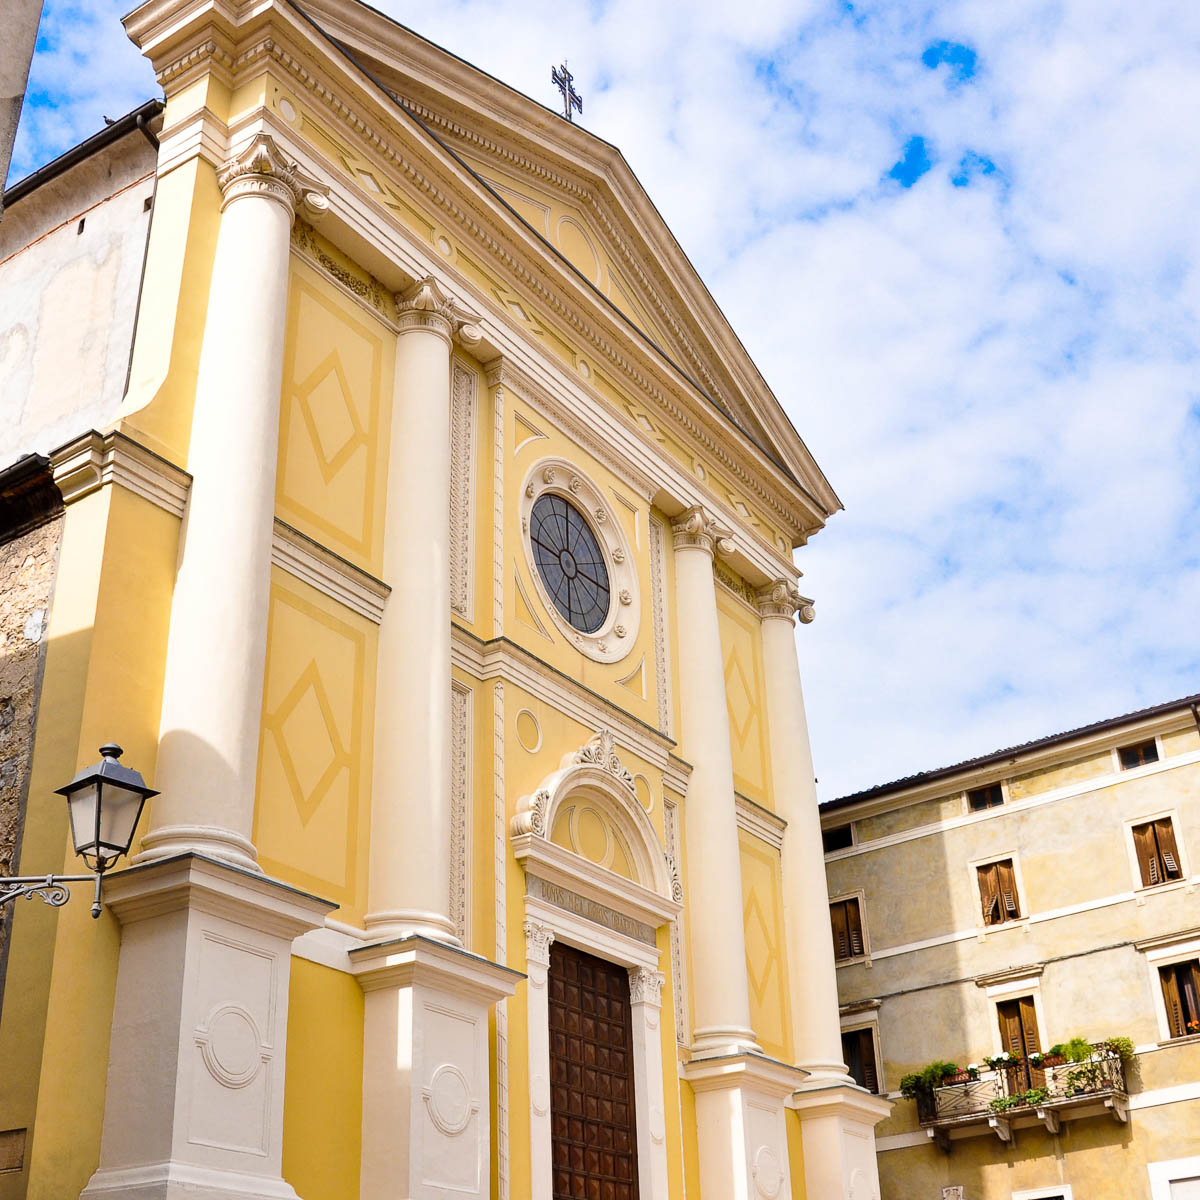 San Lorenzo Cathedral - Soave, Province of Verona, Veneto, Italy - www.rossiwrites.com